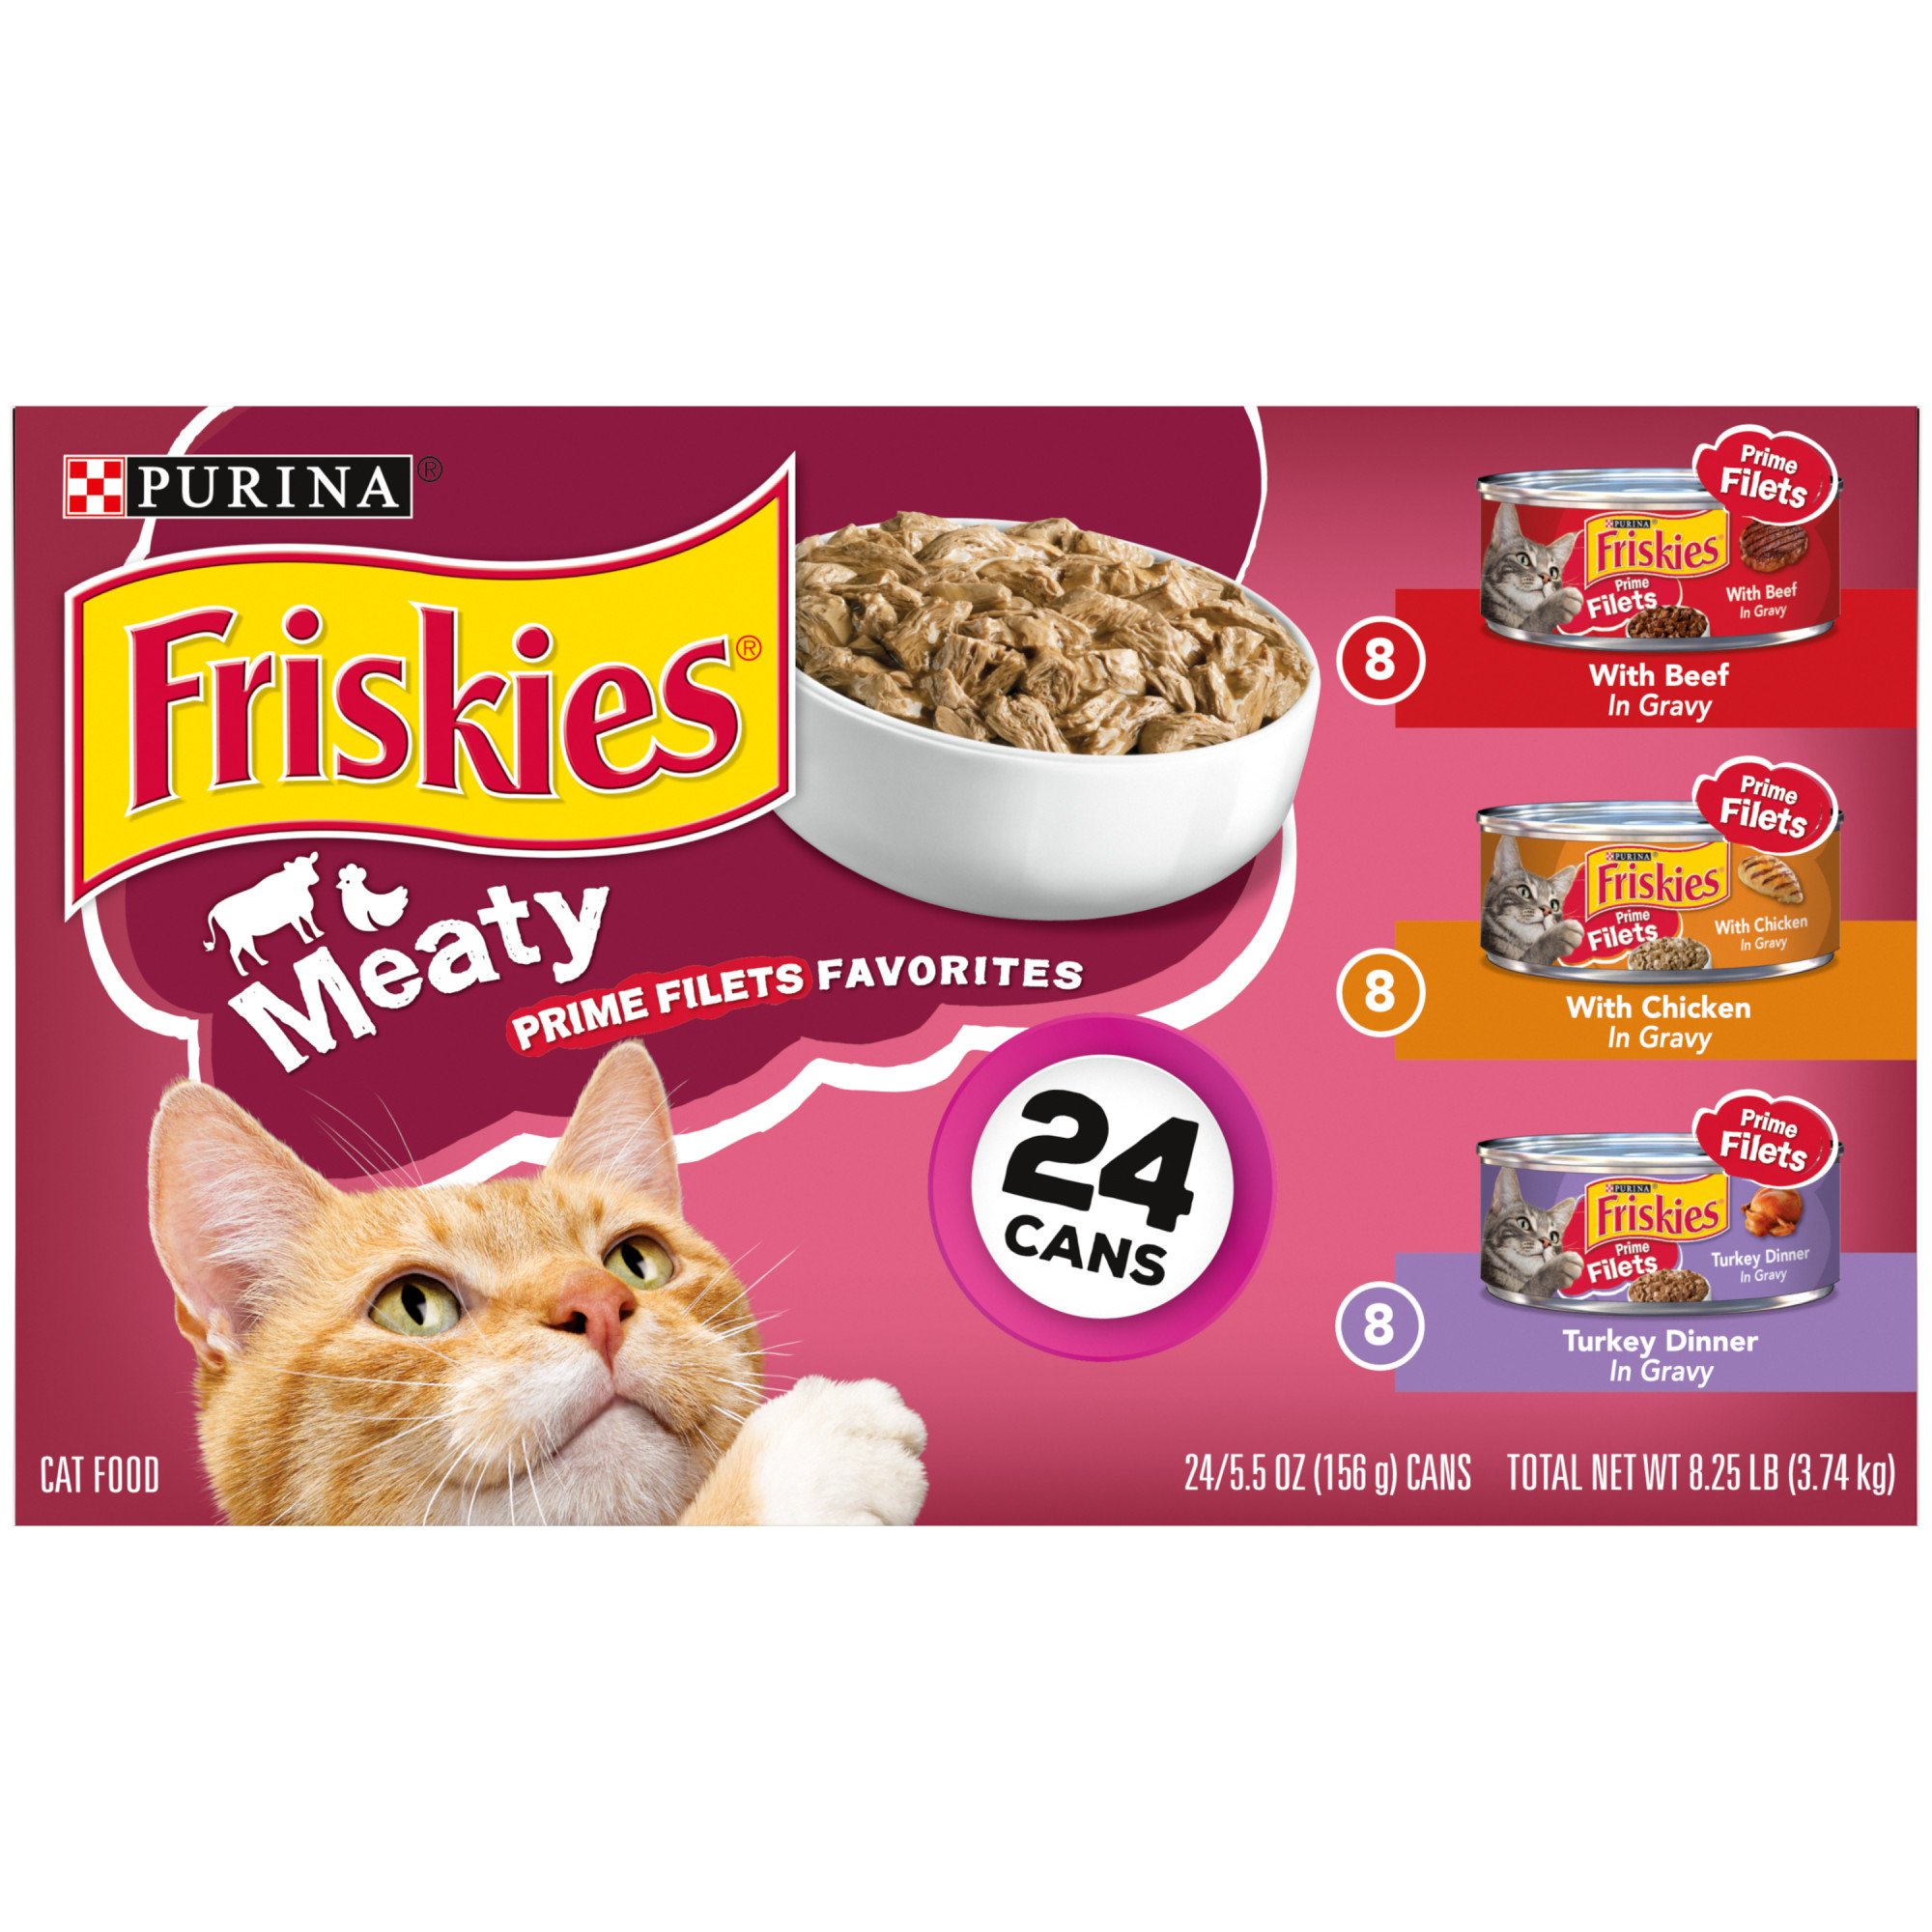 Purina Friskies Prime Filets Meaty Favorites Cat Food Variety Pack